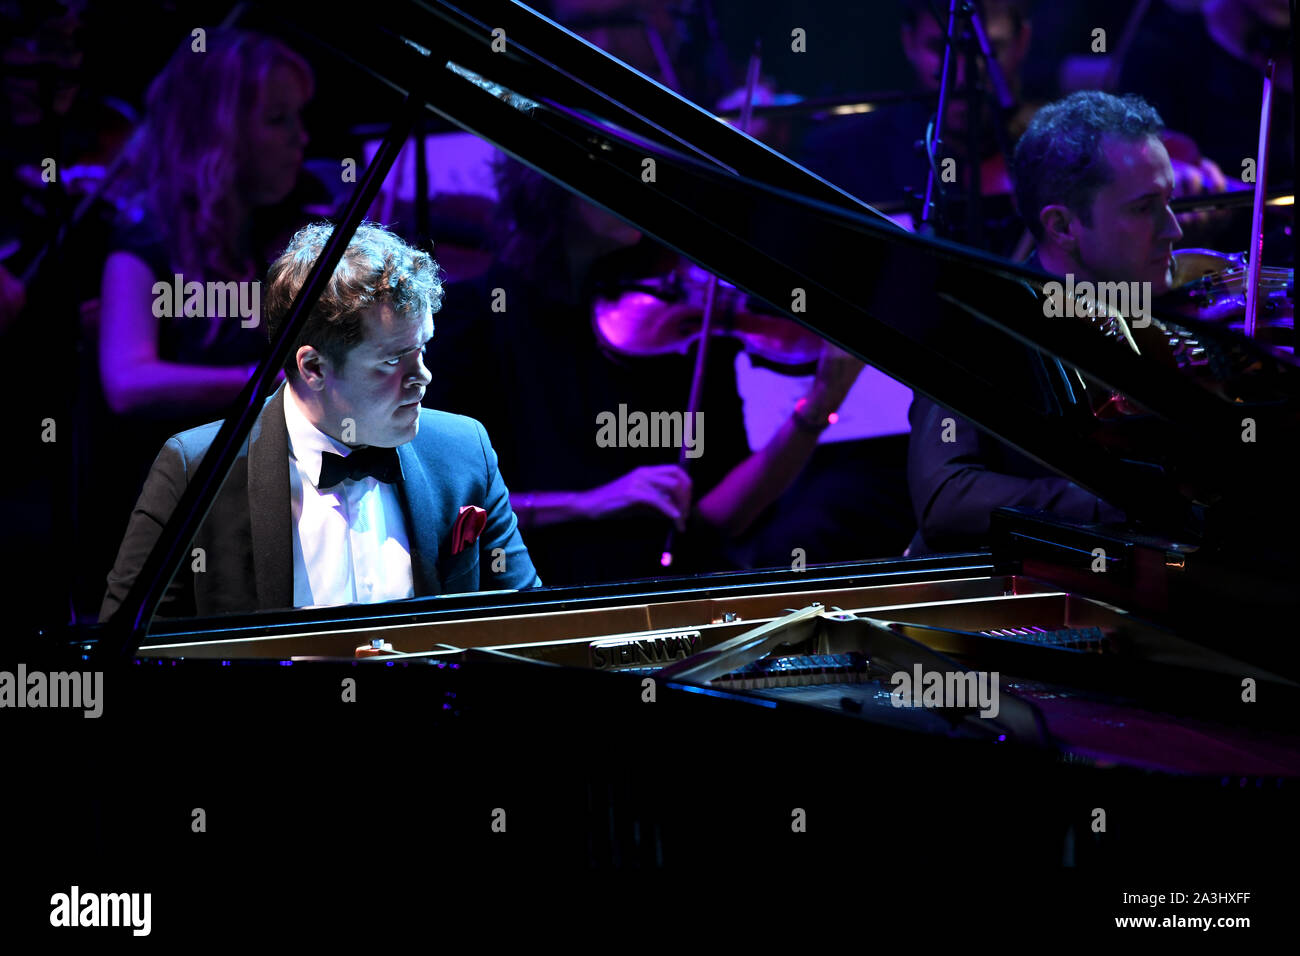 Benjamin Grosvenor performs at Classic FM Live at London's Royal Albert Hall. Stock Photo